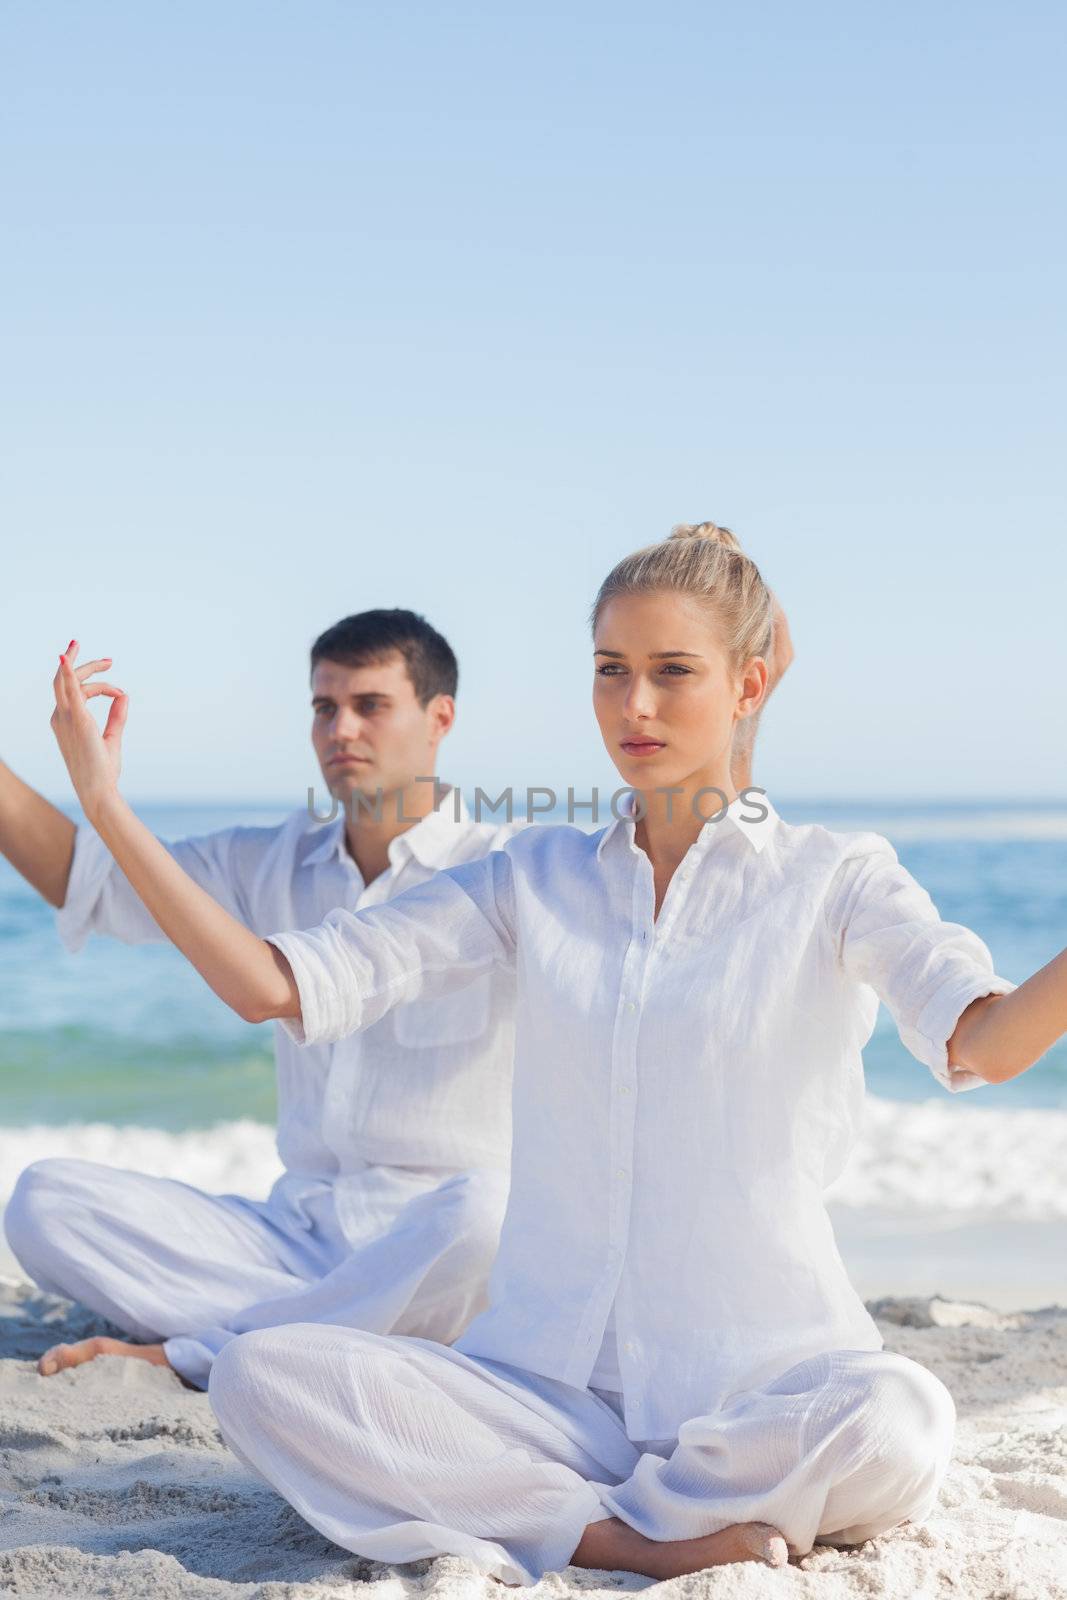 Attractive people doing yoga exercises by Wavebreakmedia